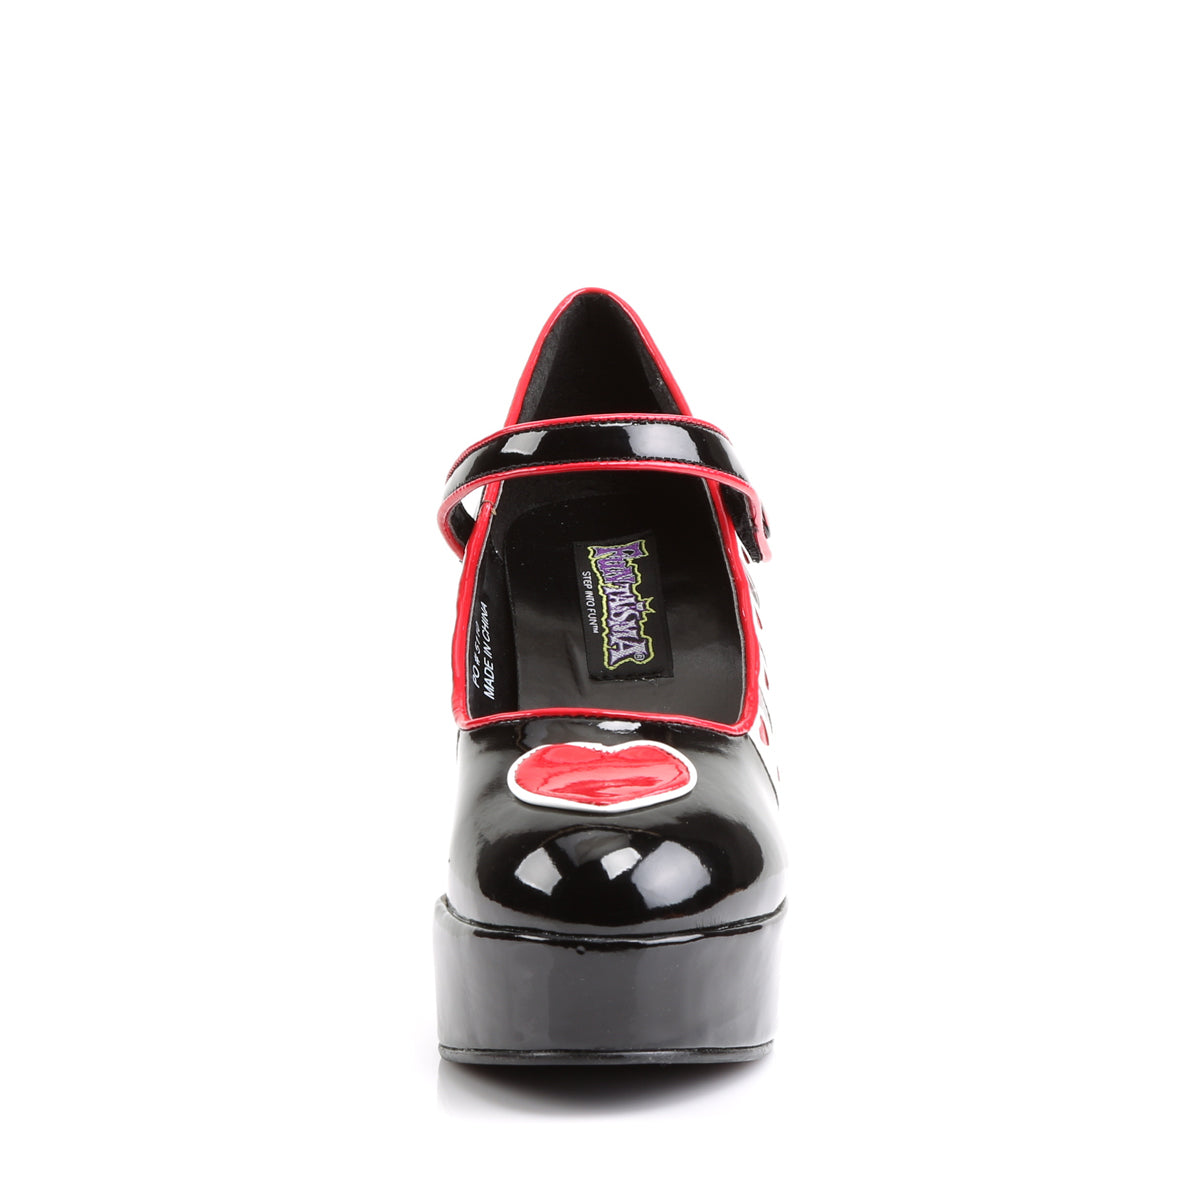 QUEEN-55 Funtasma Fantasy Black-White-Red Patent Women's Shoes [Fancy Dress Costume Shoes]